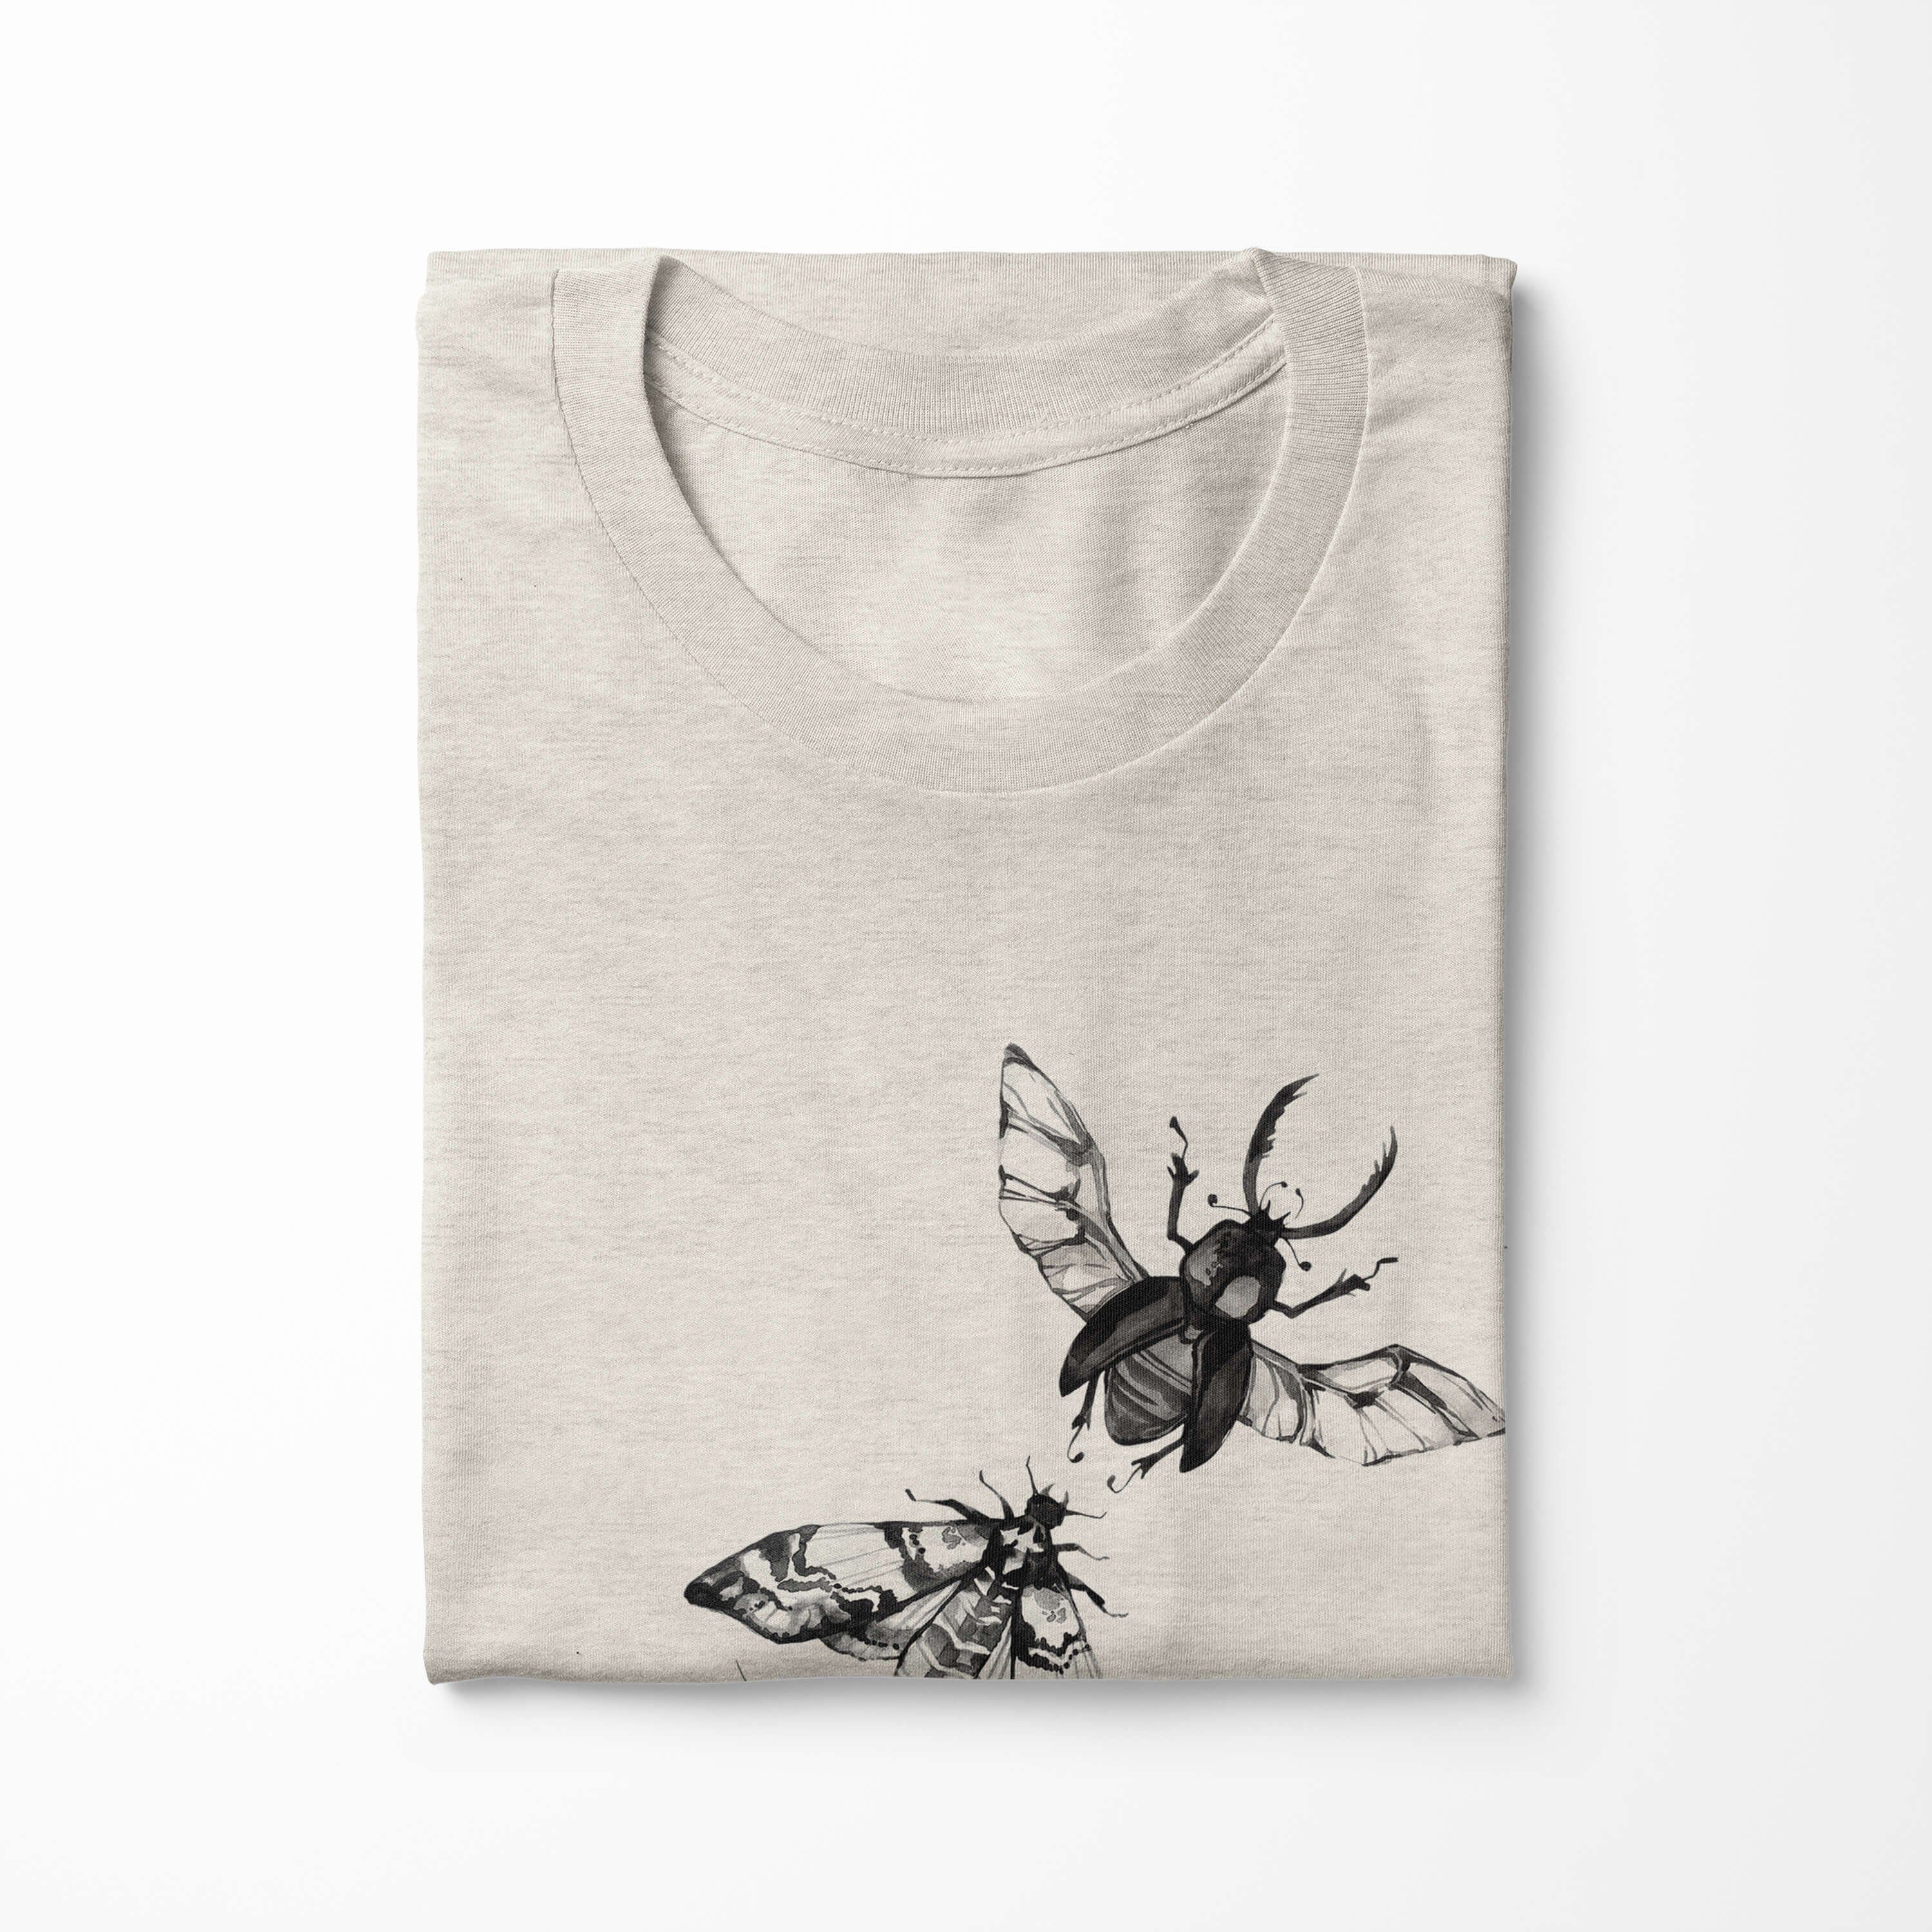 T-Shirt Nachhaltig Shirt Sinus Motiv Insekten (1-tlg) Farbe T-Shirt Herren Ökom 100% Bio-Baumwolle Organic Aquarell Käfer Art